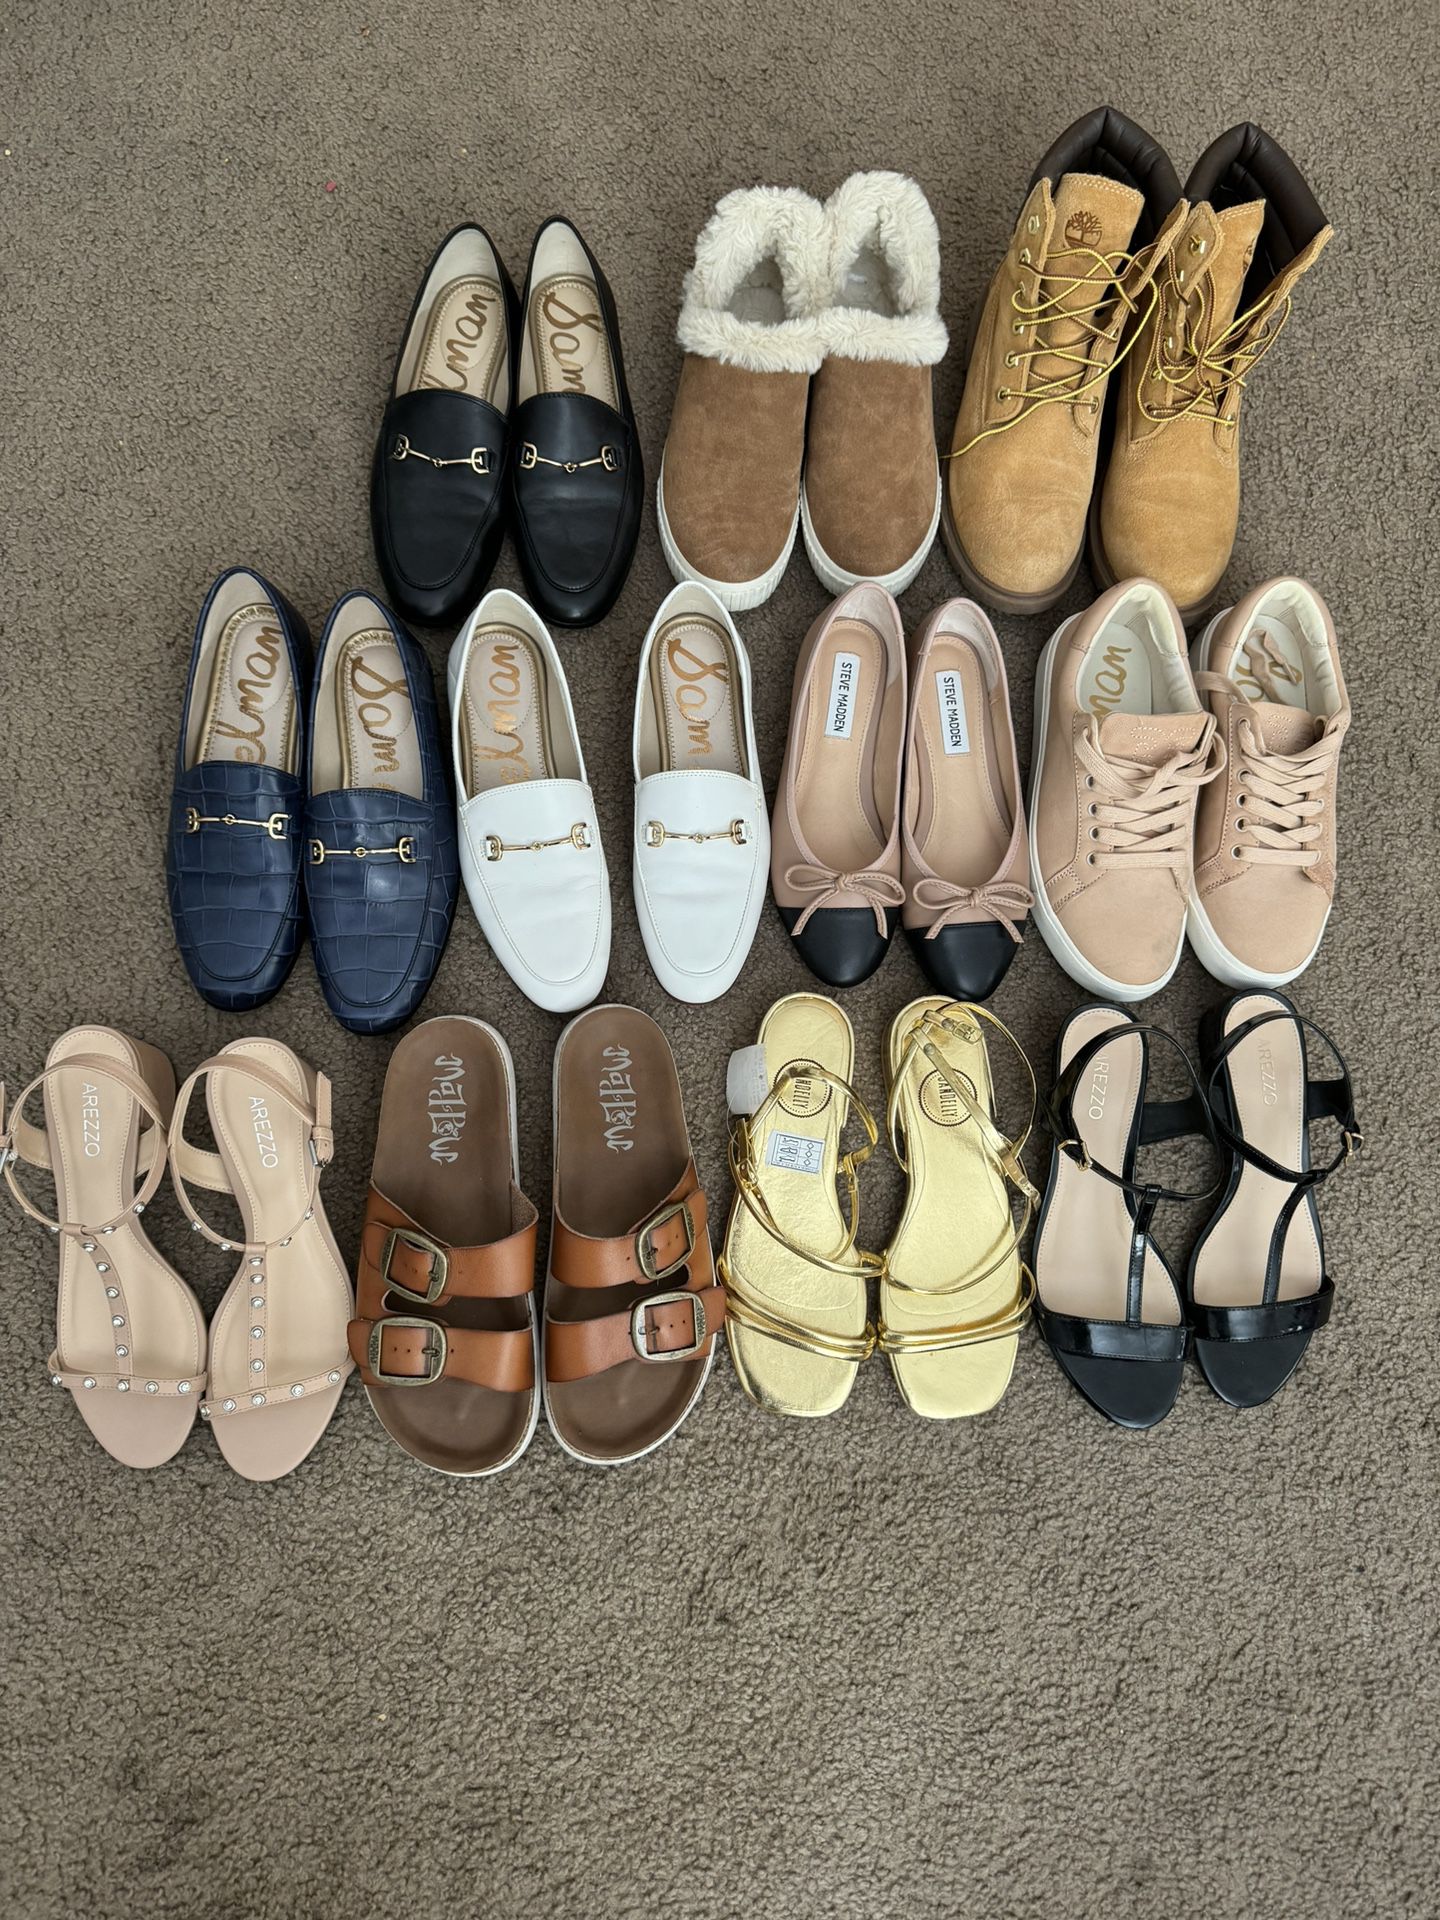 Size 6.5 Woman’s Shoes 